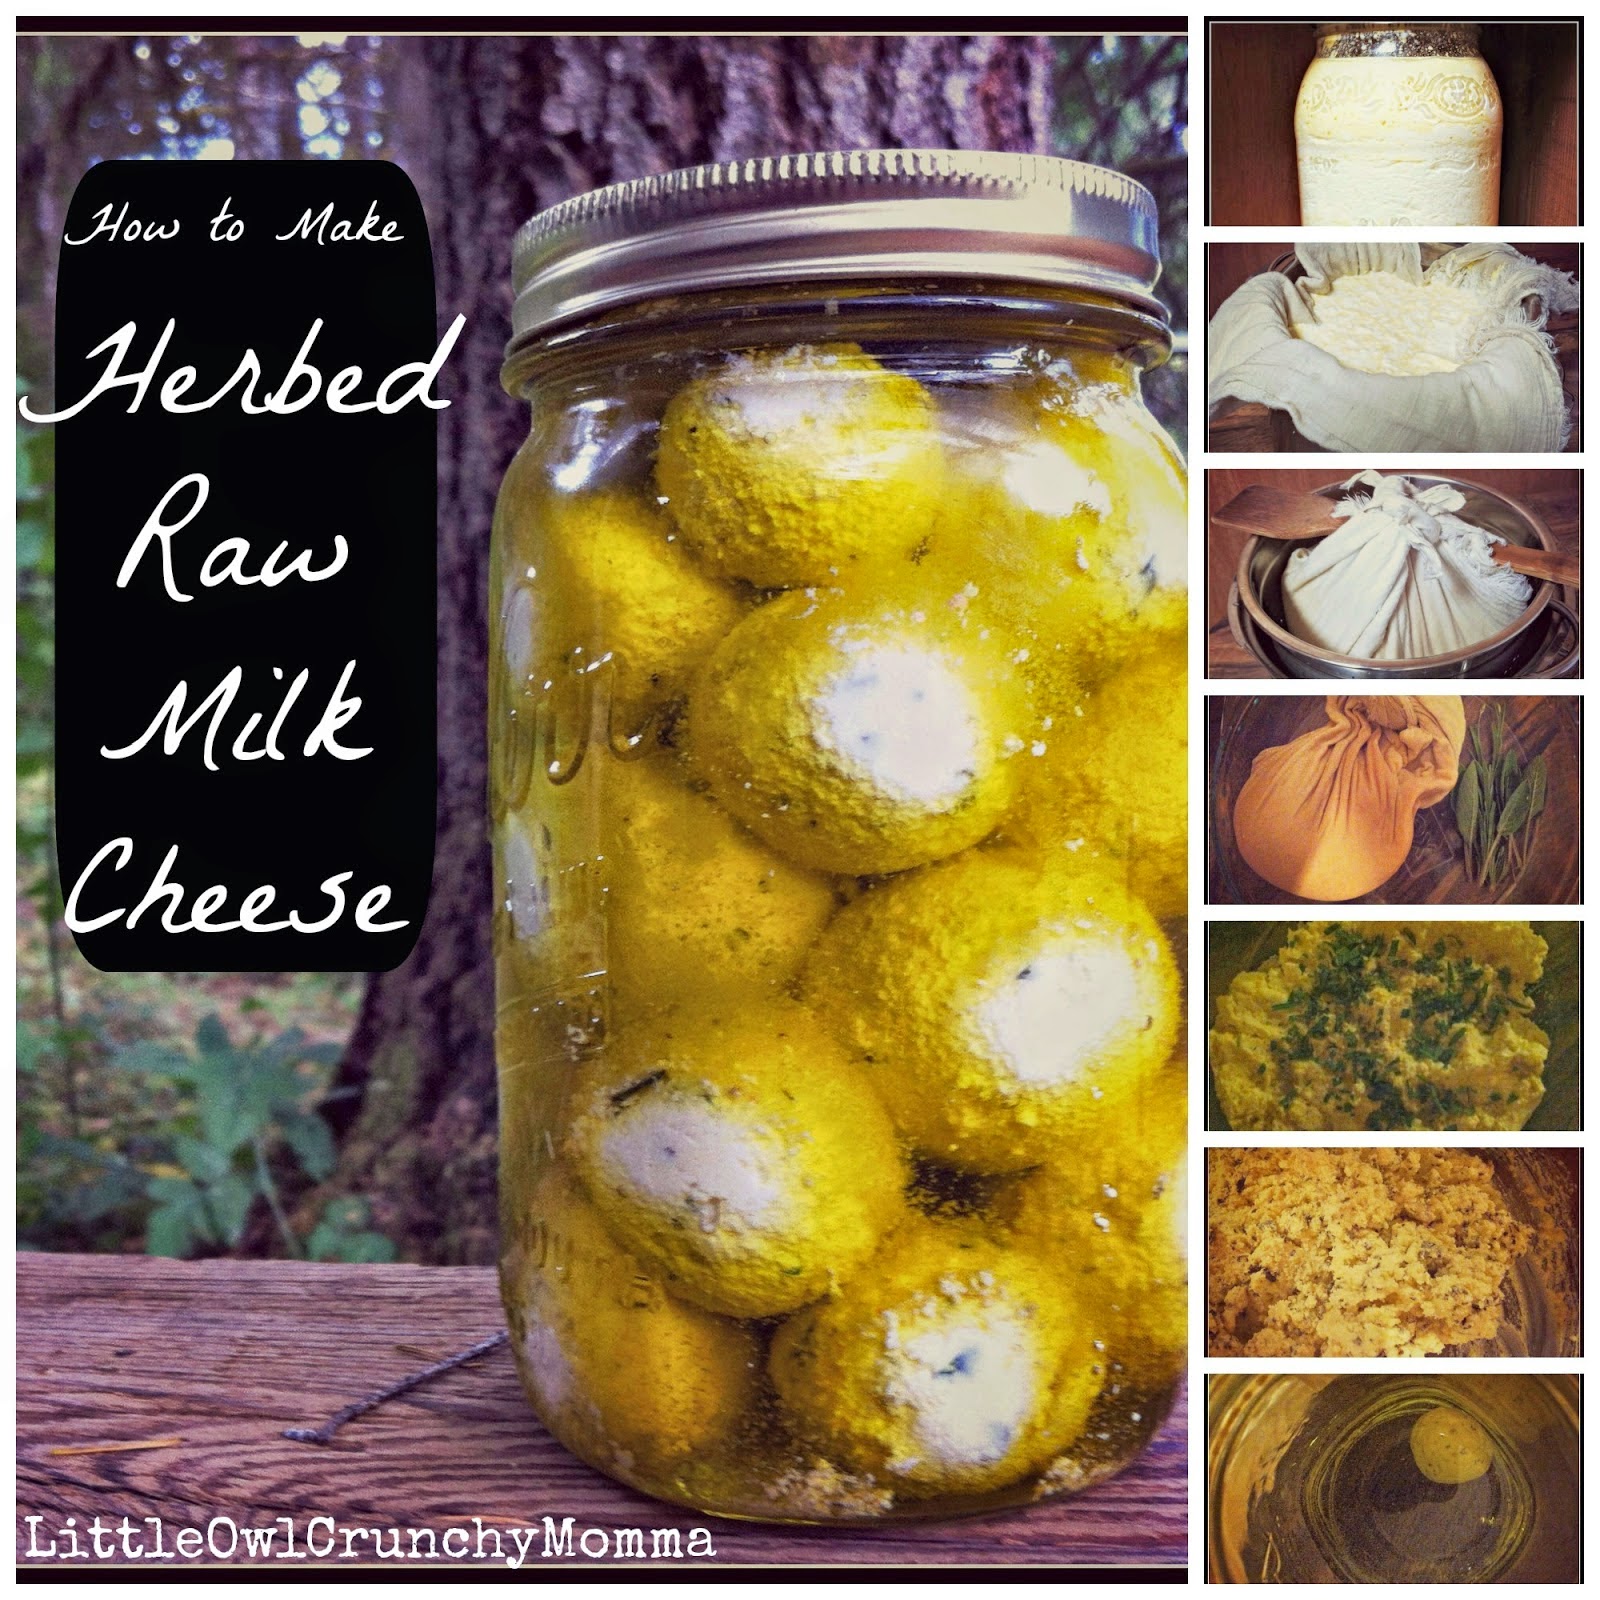 http://www.littleowlcrunchymomma.blogspot.com/2014/07/how-to-make-herbed-raw-milk-cheese.html